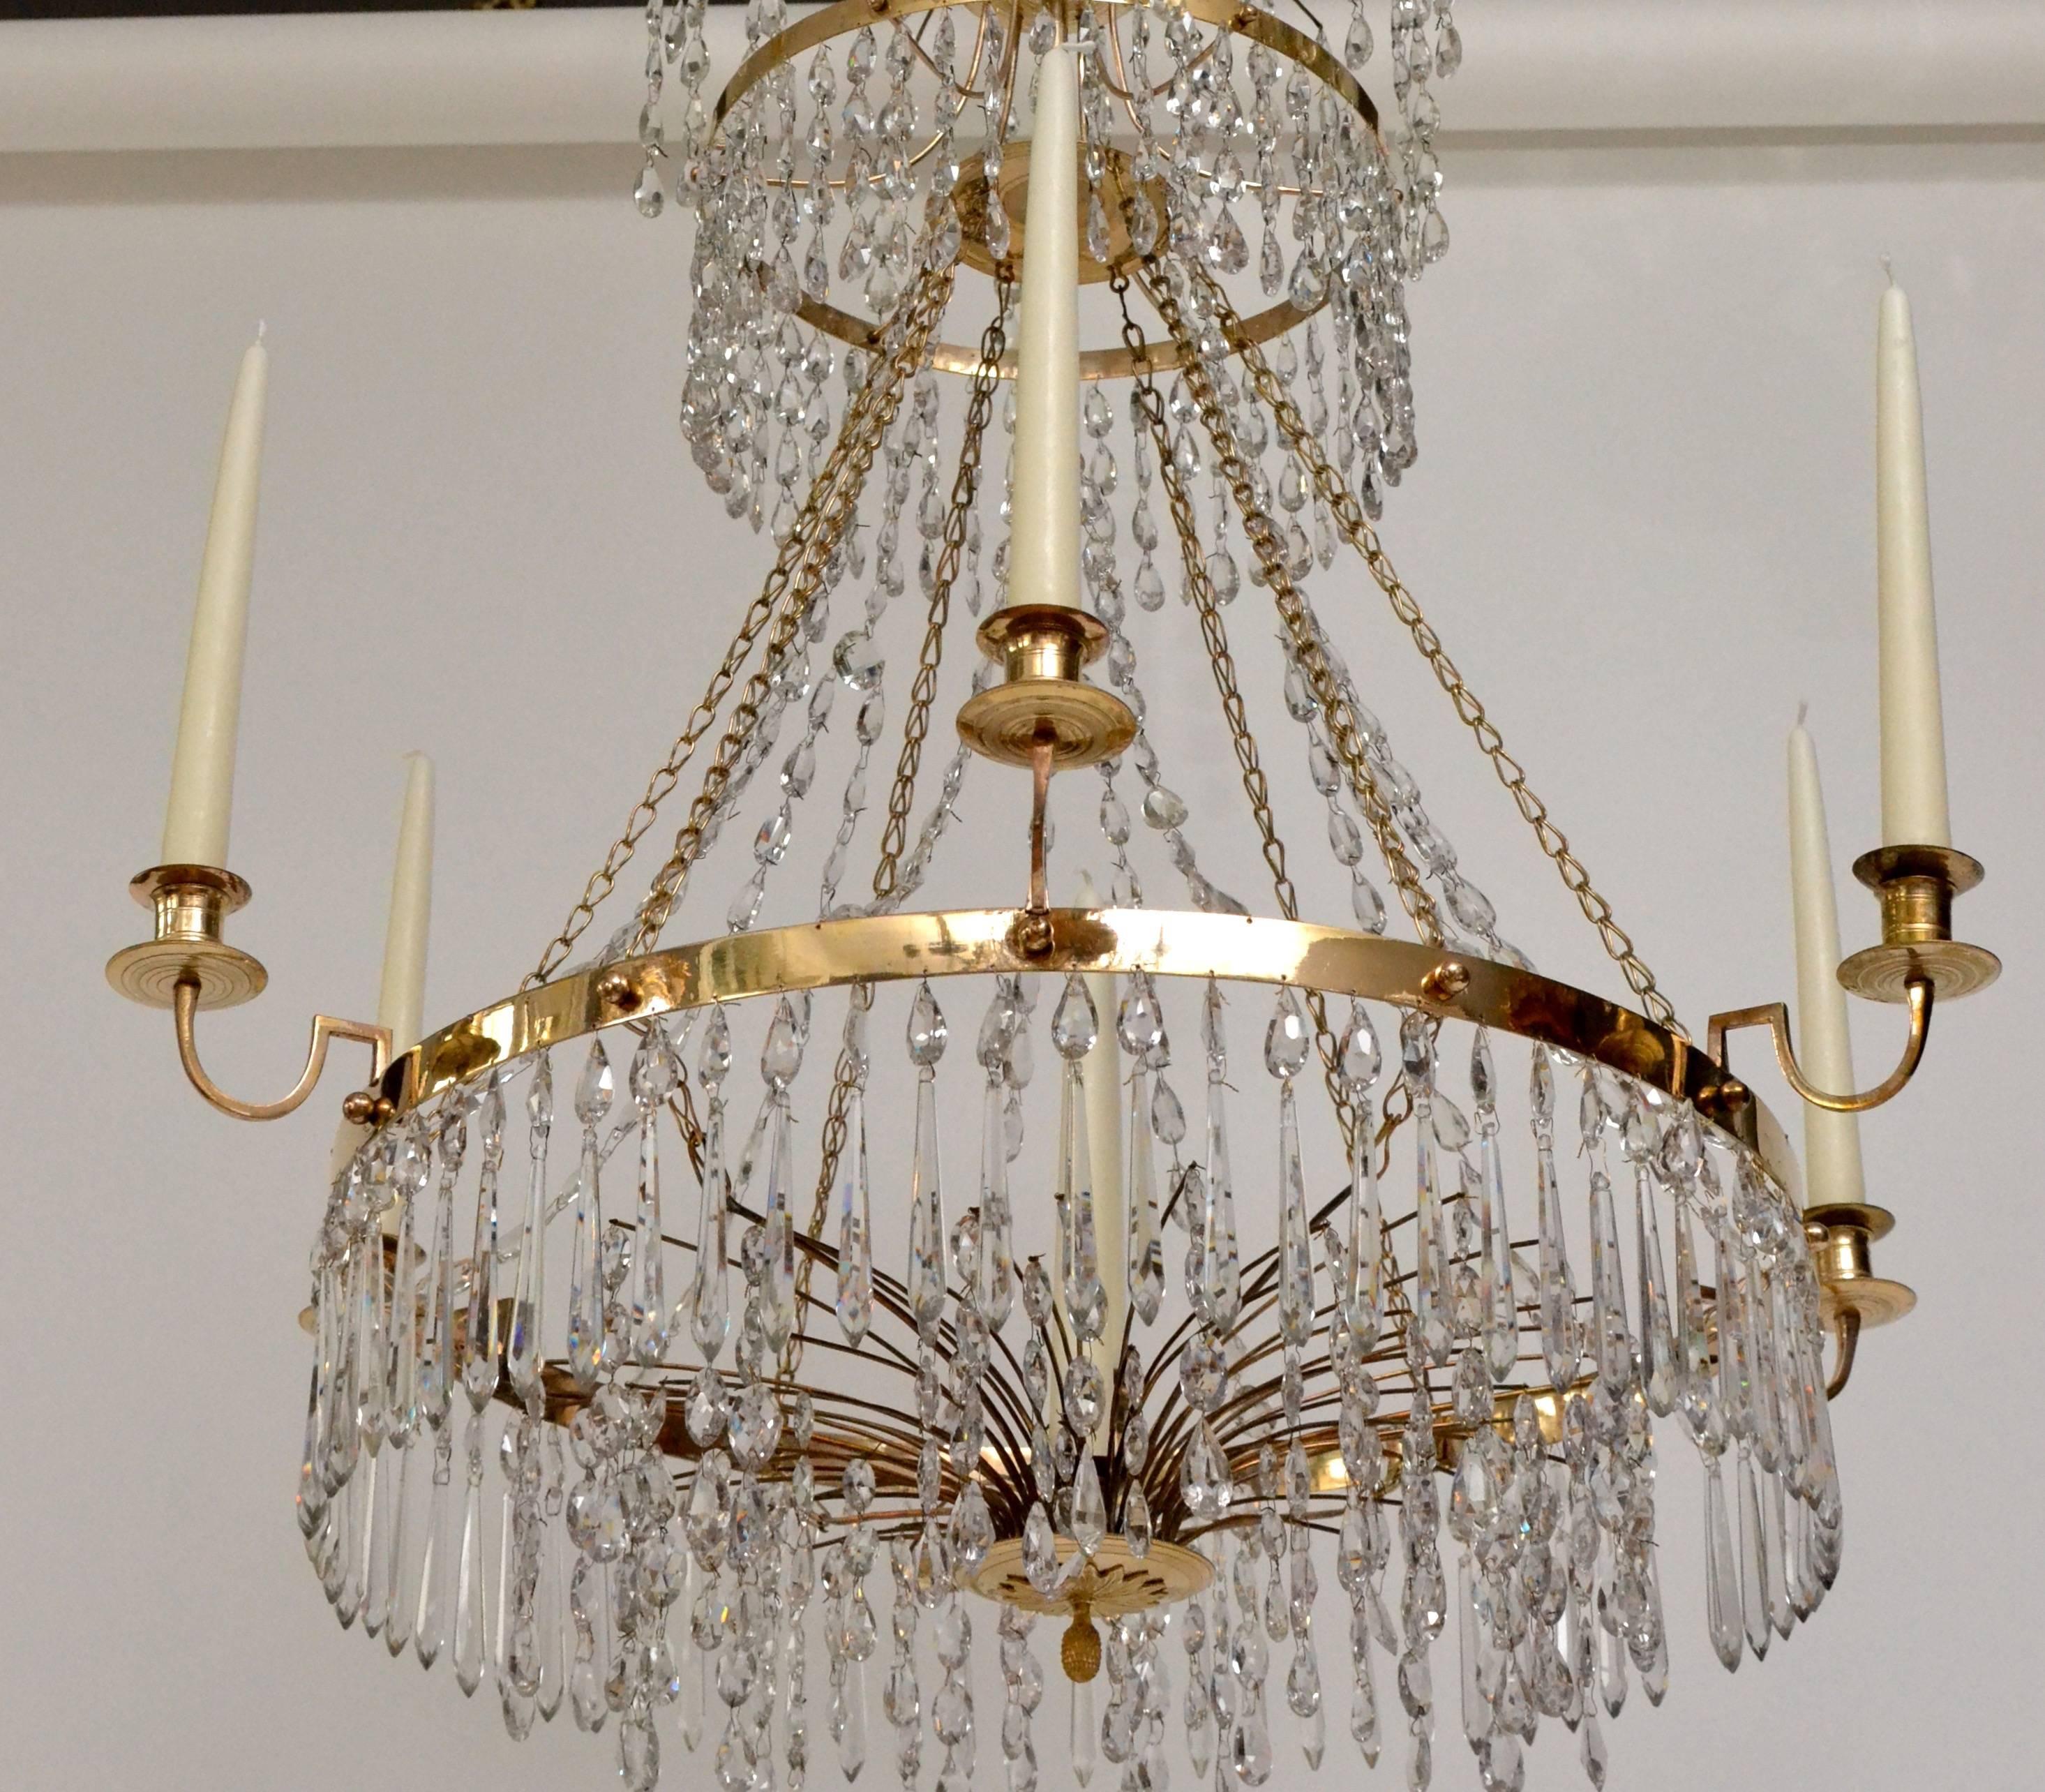 A Swedish Gustavian chandelier from circa 1800.